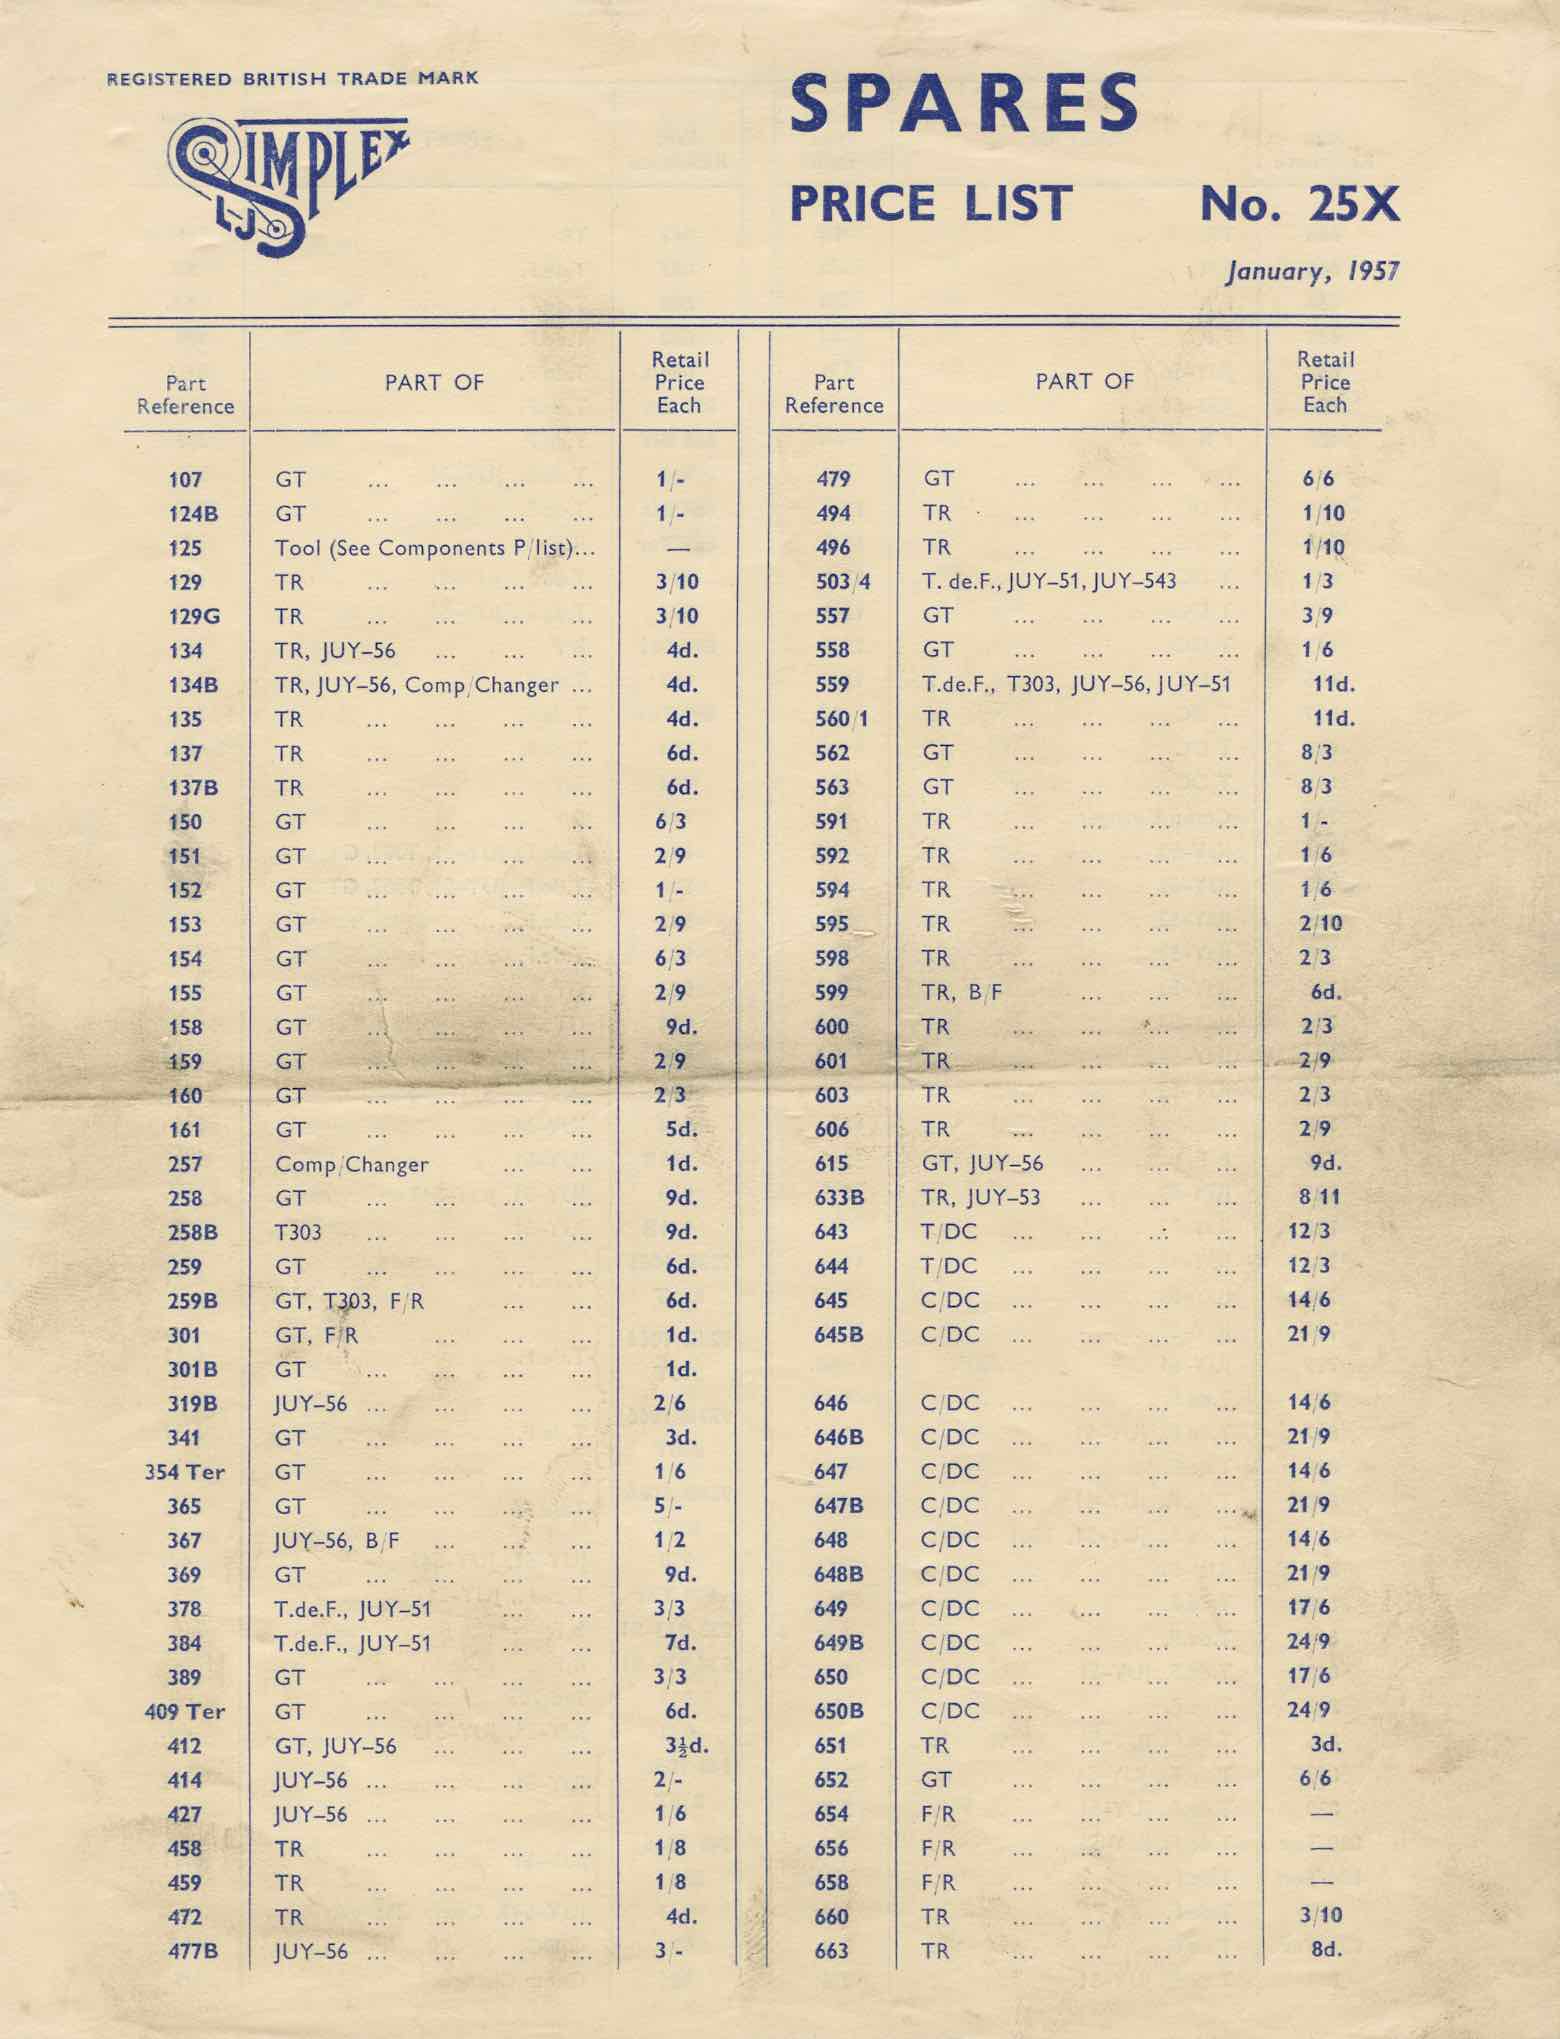 Simplex - Spares Price List No. 25X scan 1 main image